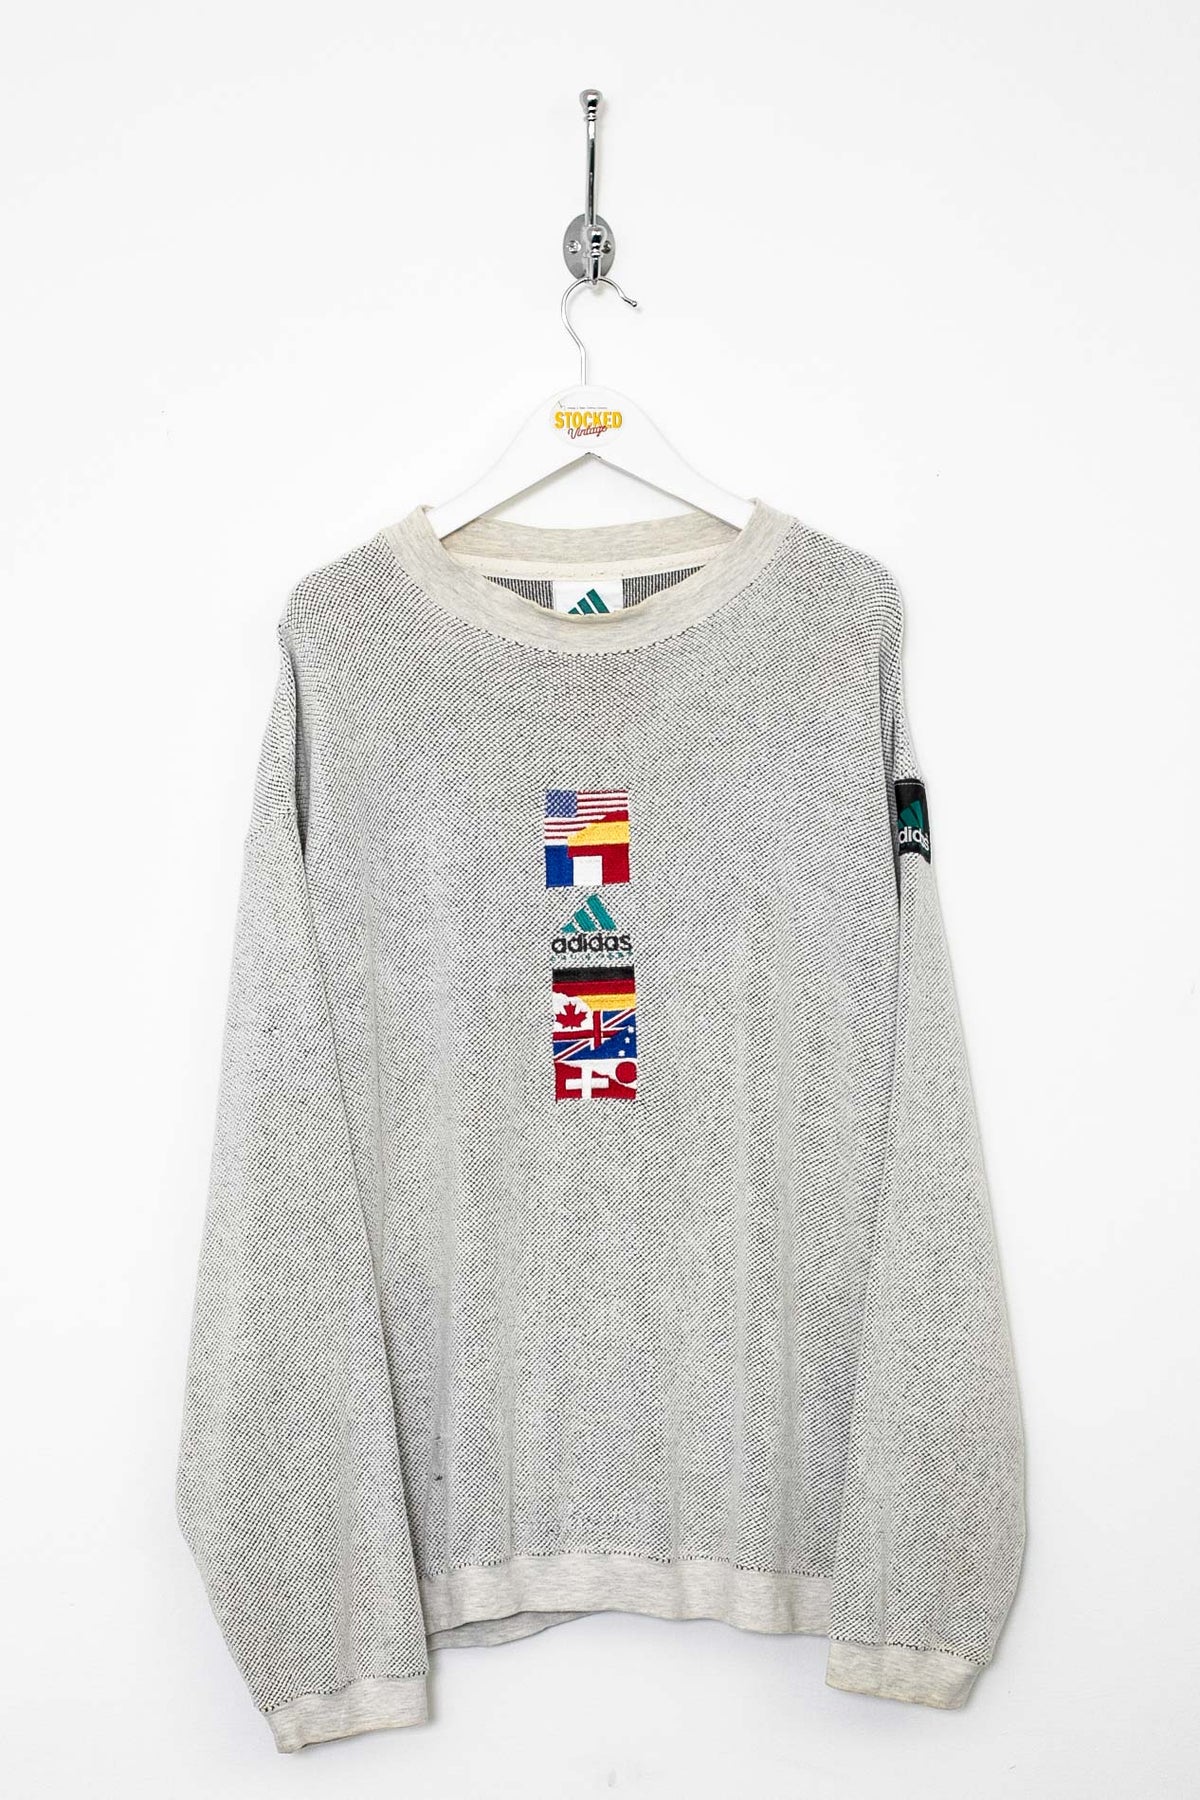 90s Adidas Equipment Sweatshirt (L)